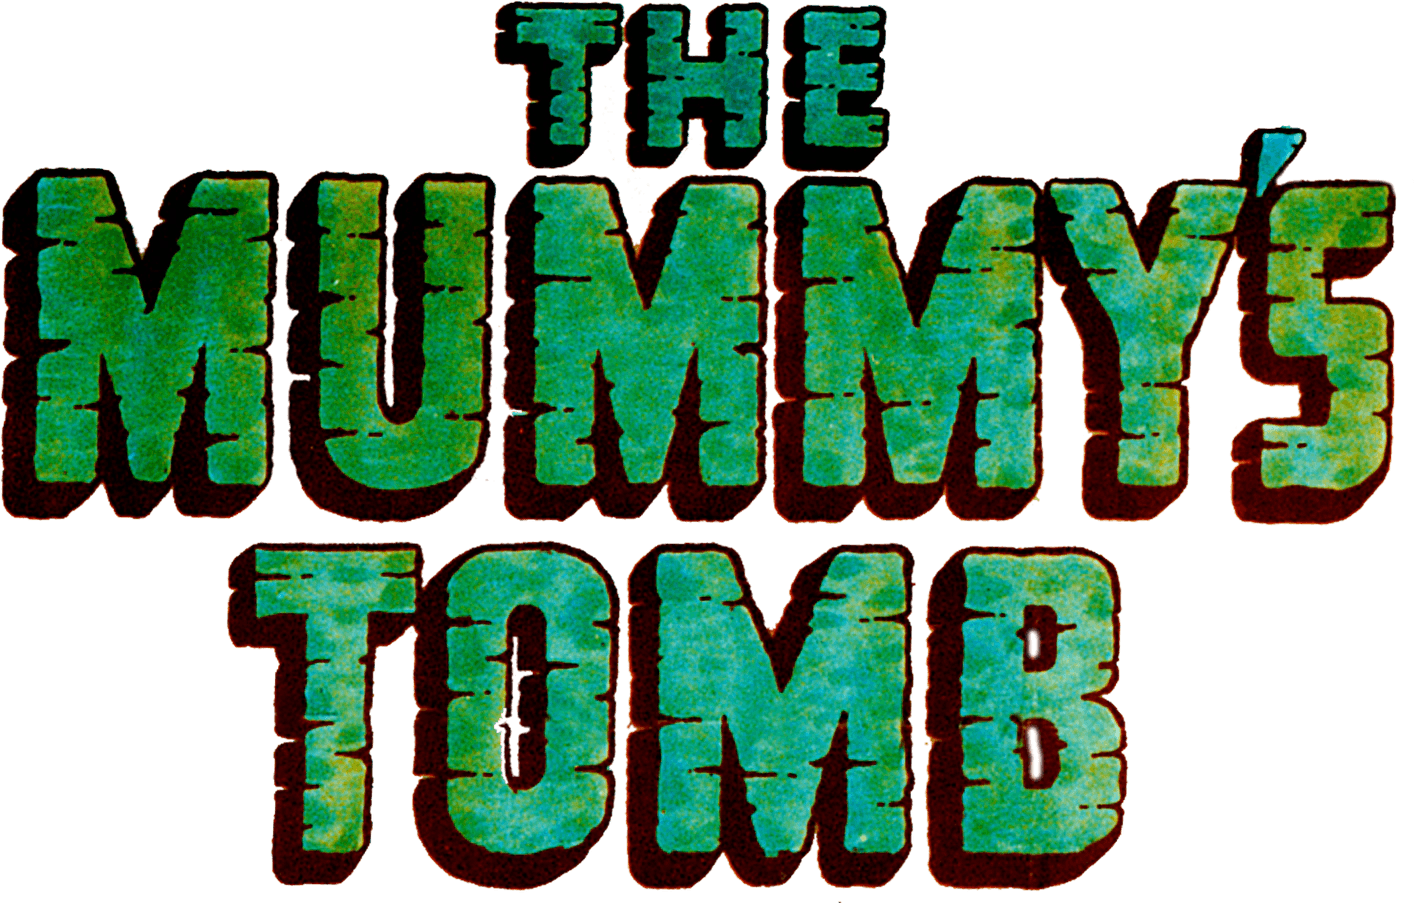 The Mummy's Tomb logo